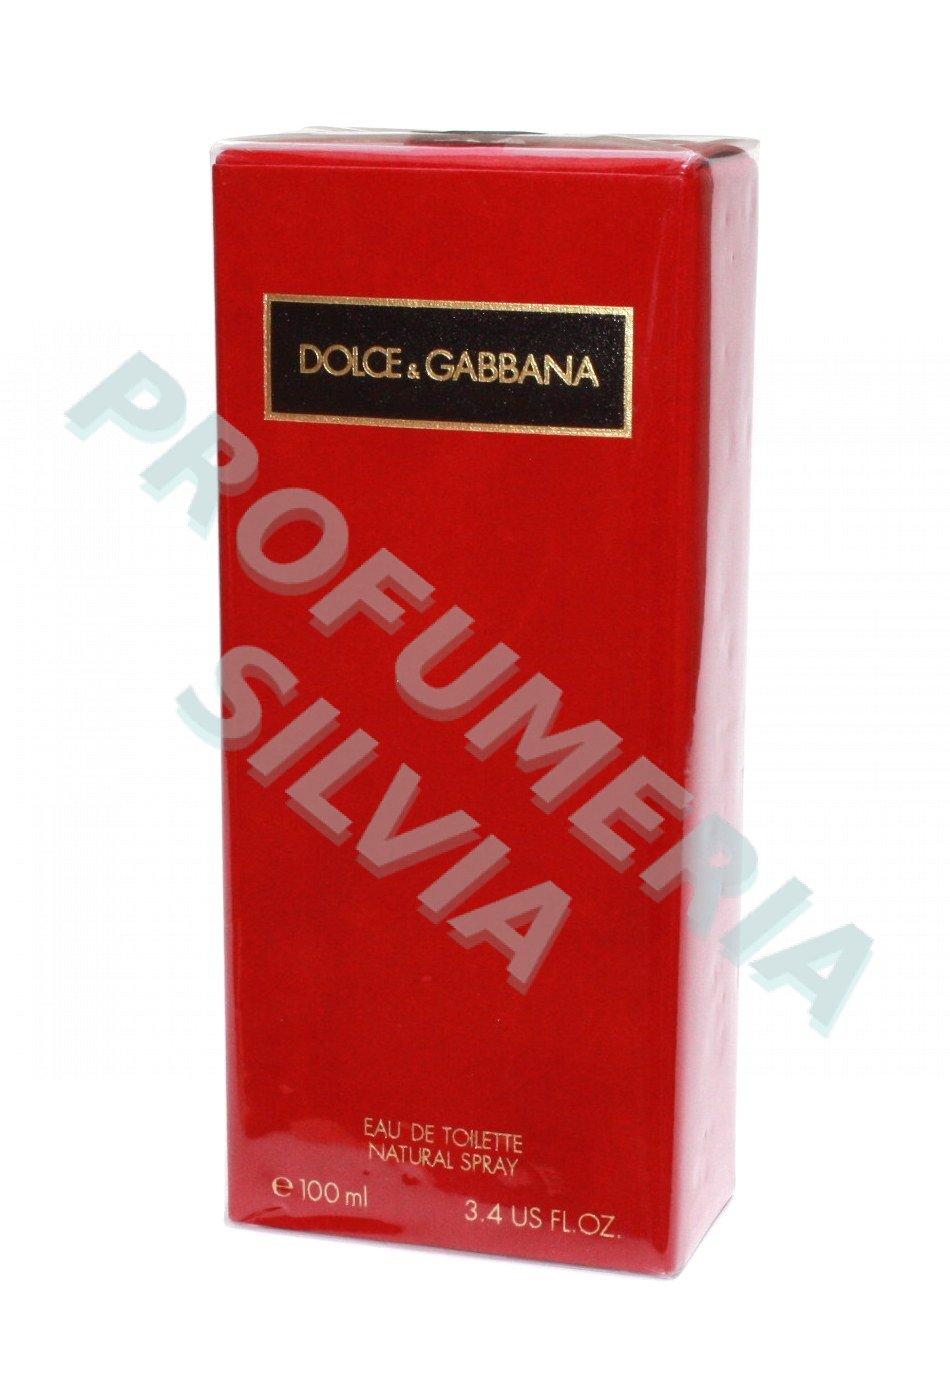 Foto dolce y gabbana (rojo) Dolce & Gabbana foto 33523